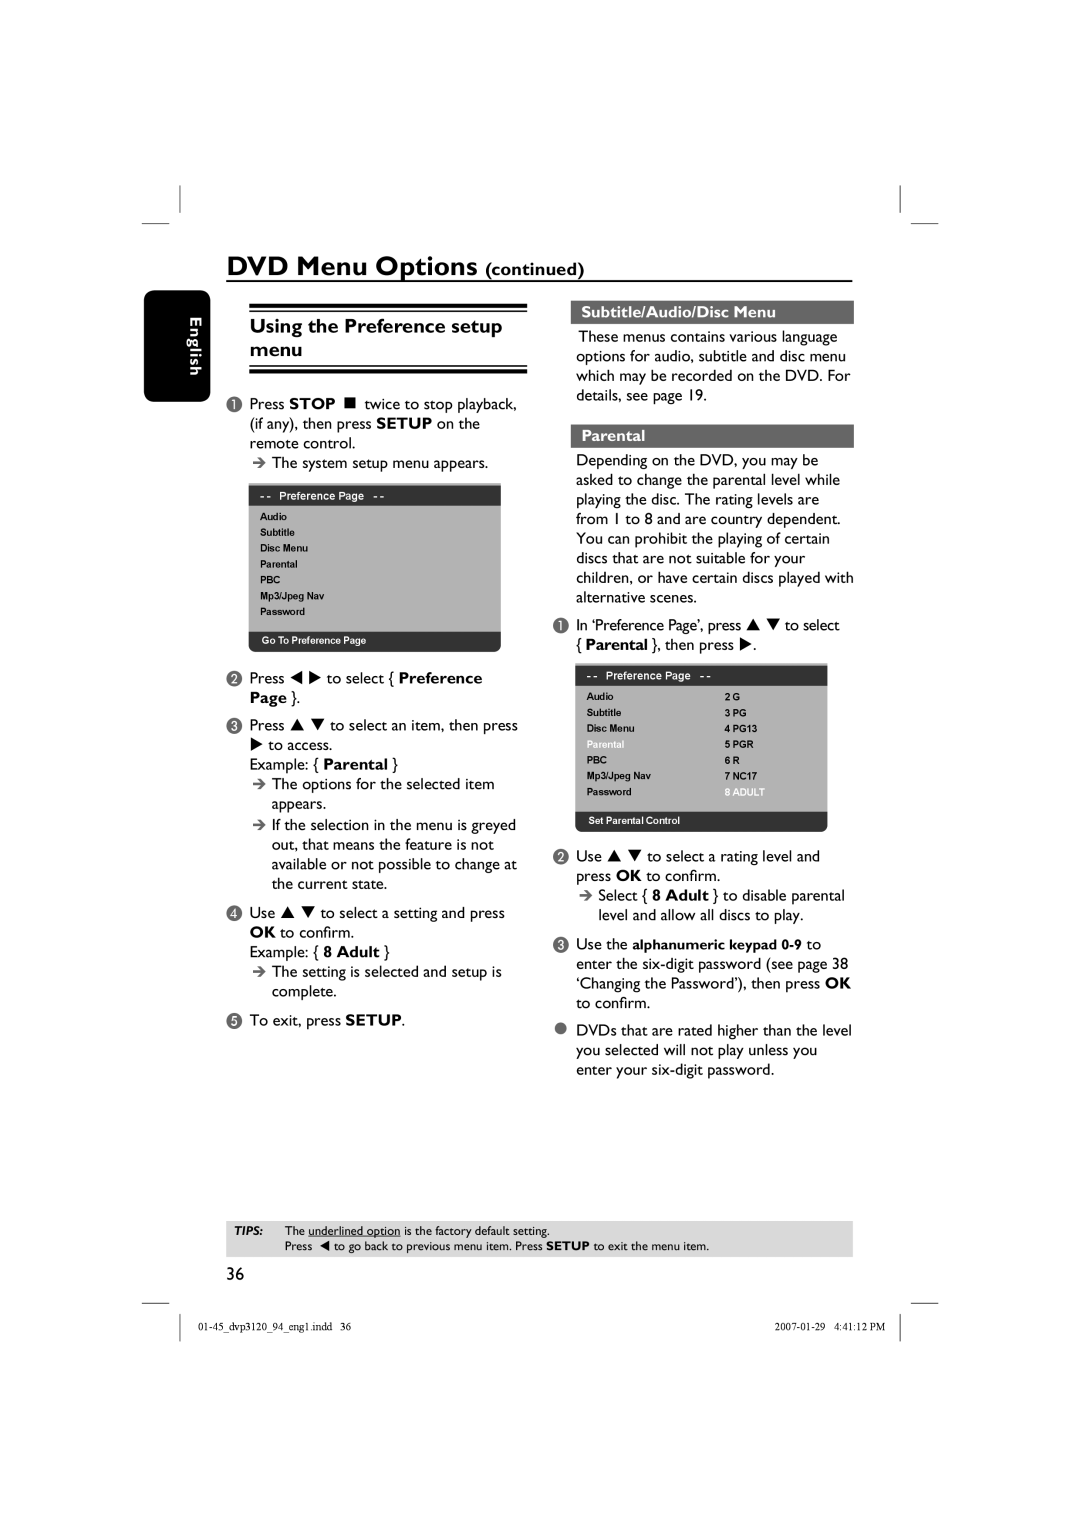 Philips DVP3721X Using the Preference setup menu, Subtitle/Audio/Disc Menu, Parental, DVD Menu Options continued, English 